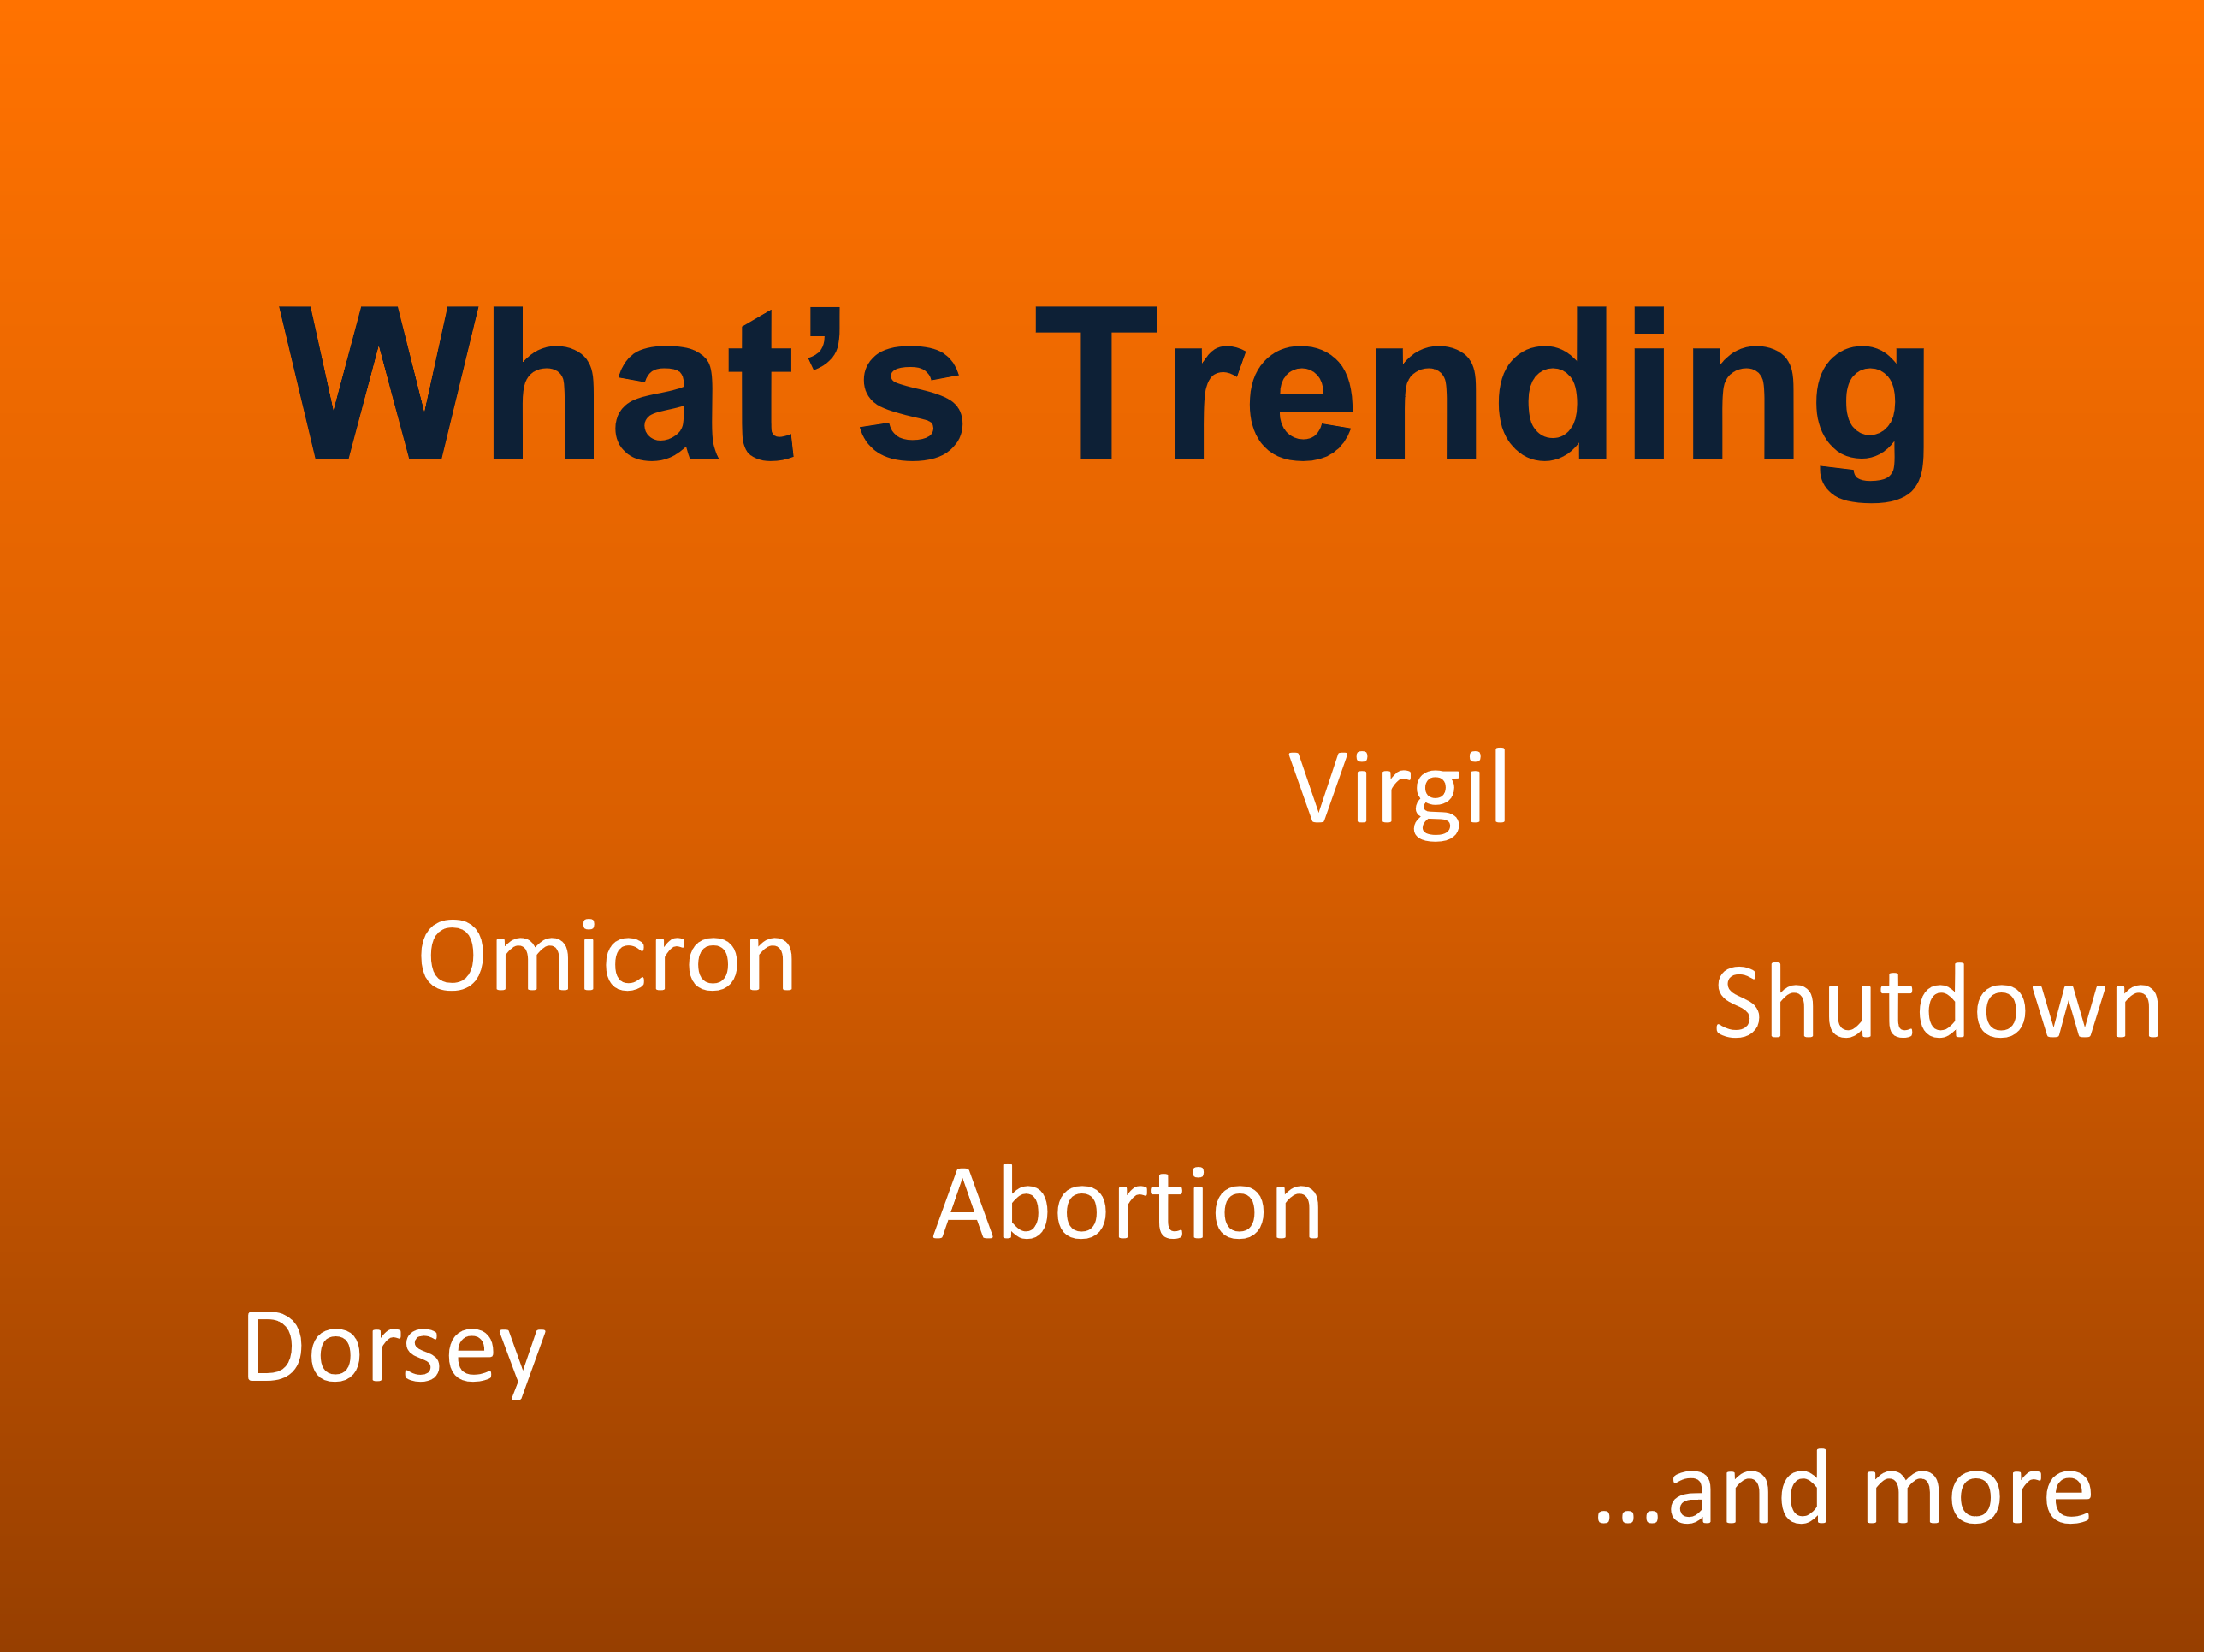 12/4/21 What's Trending This Week